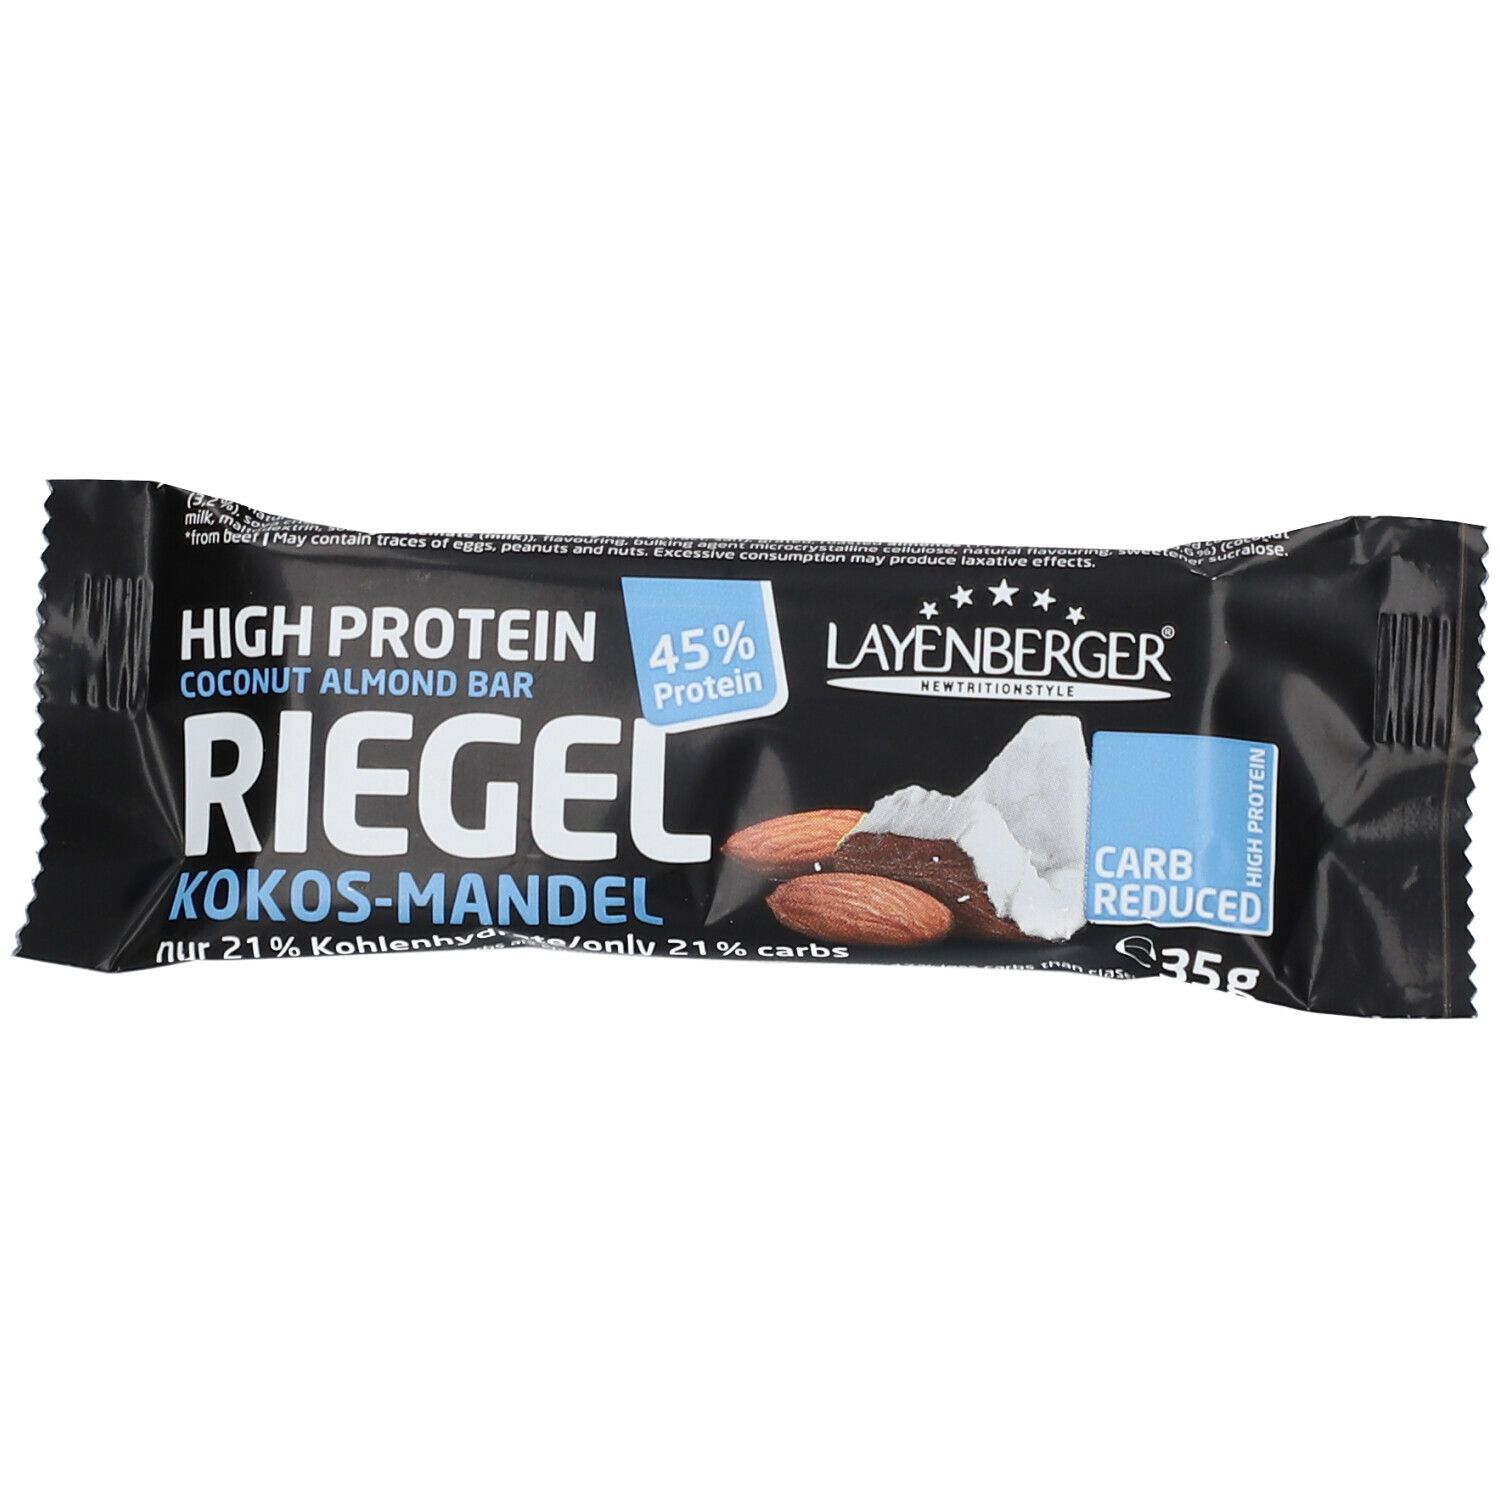 LAYENBERGER® High Protein Riegel Kokos-Mandel